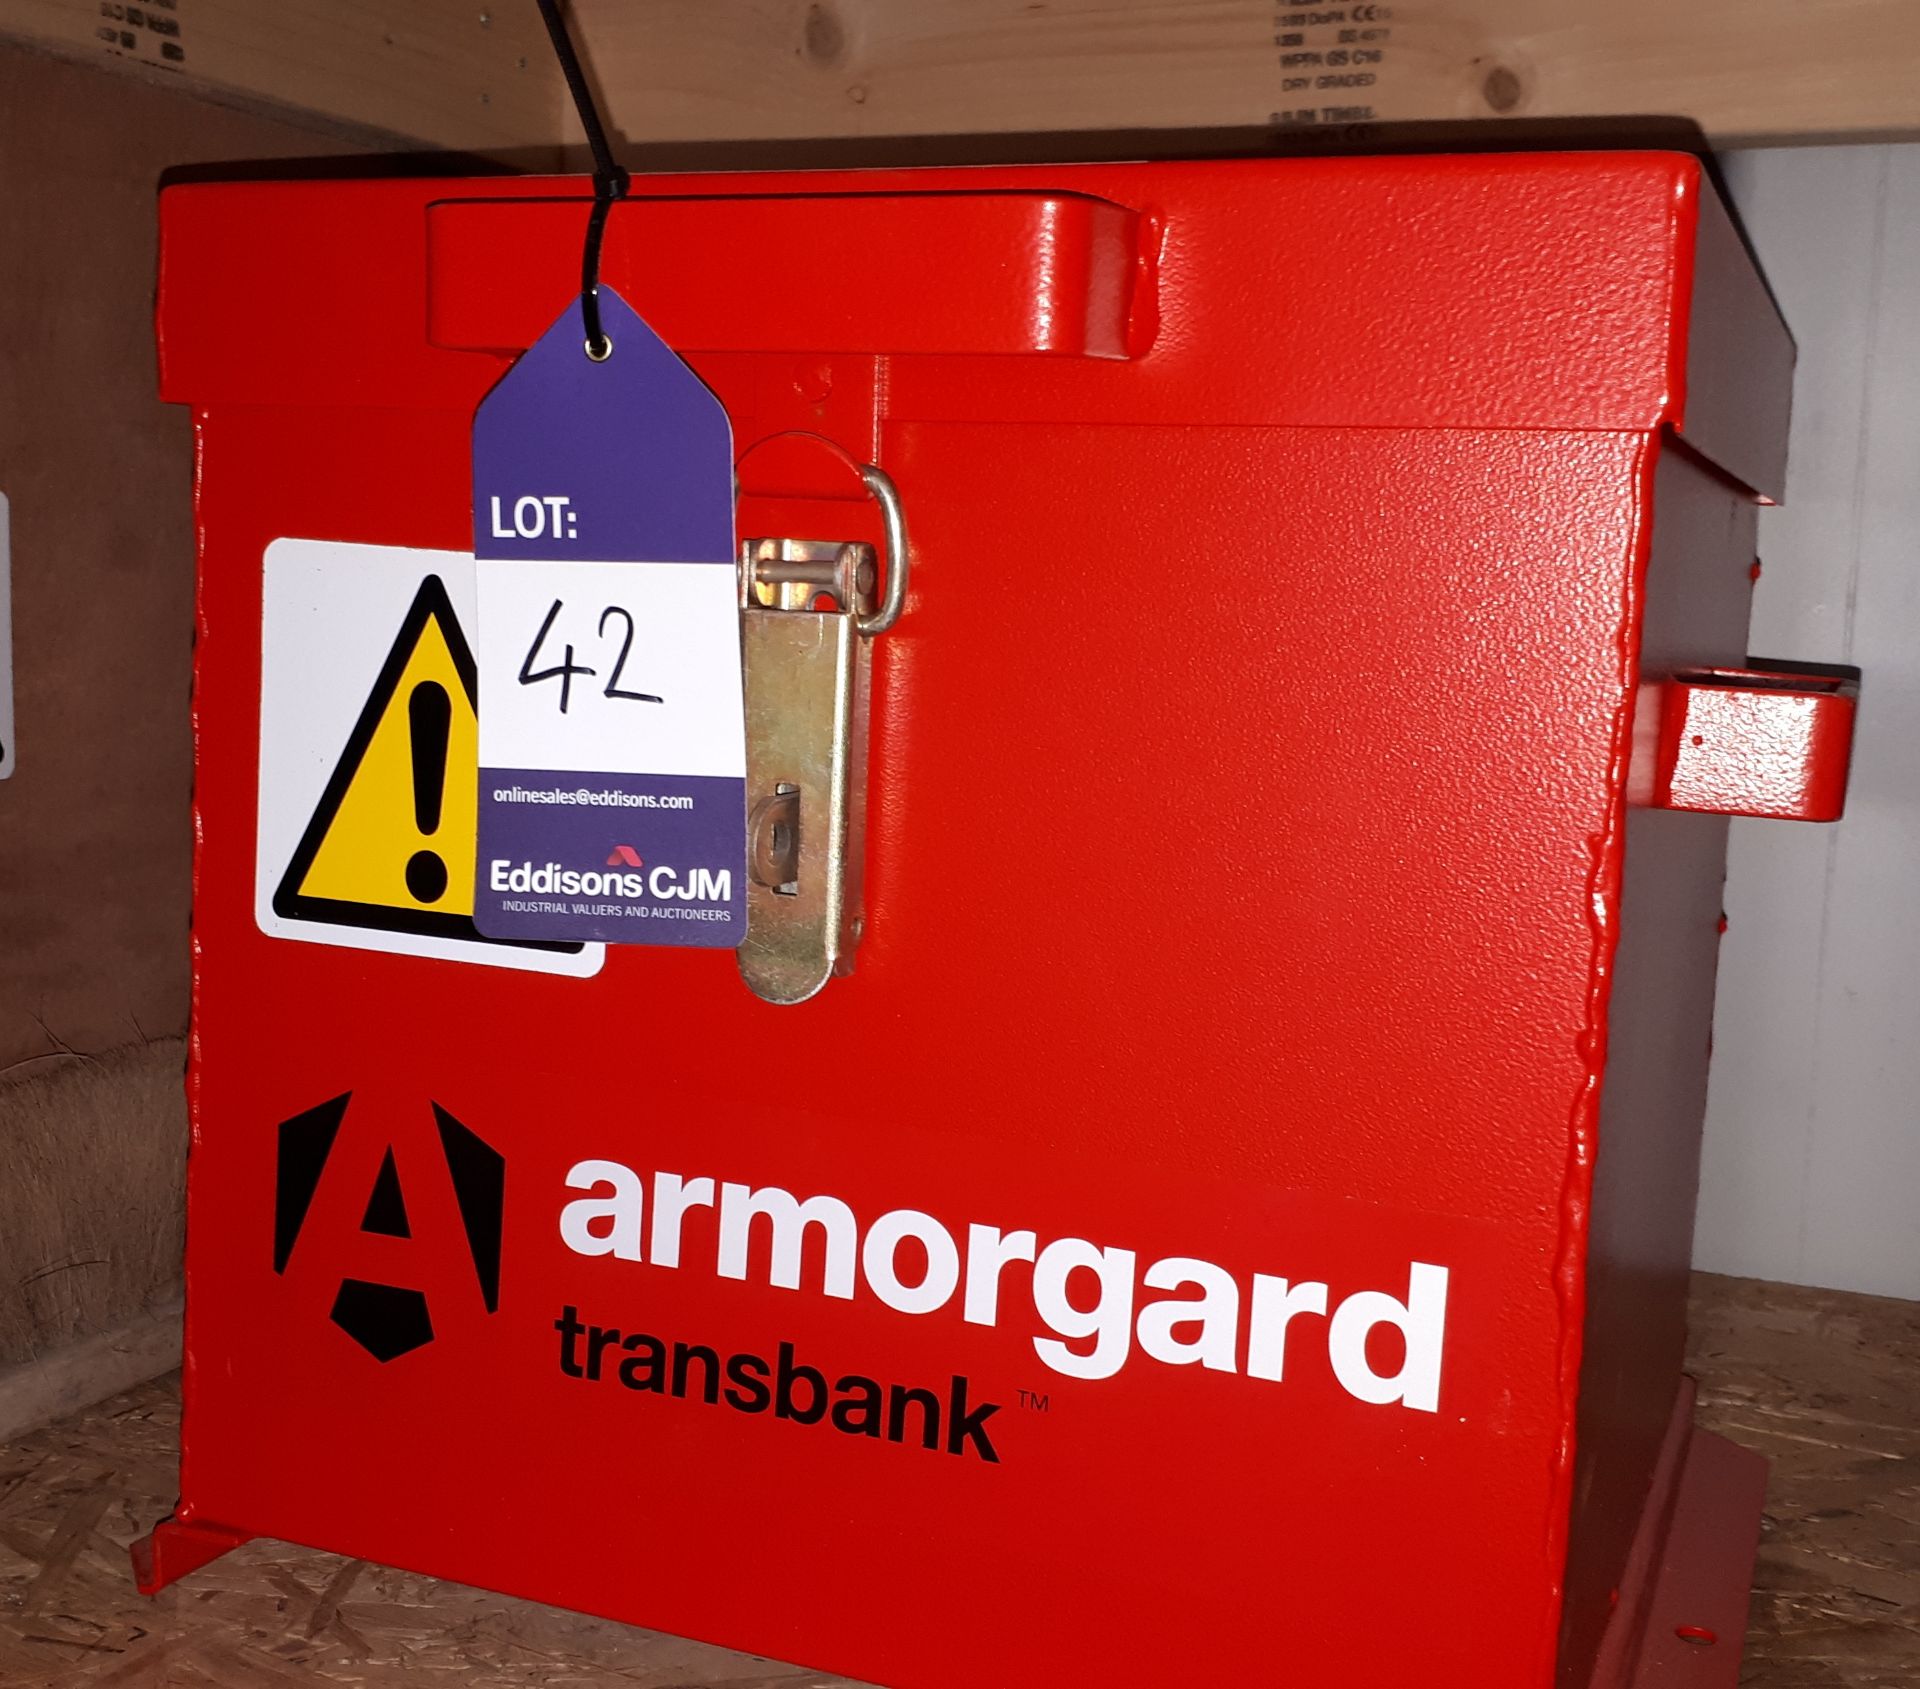 Armorgard Transbank transit box